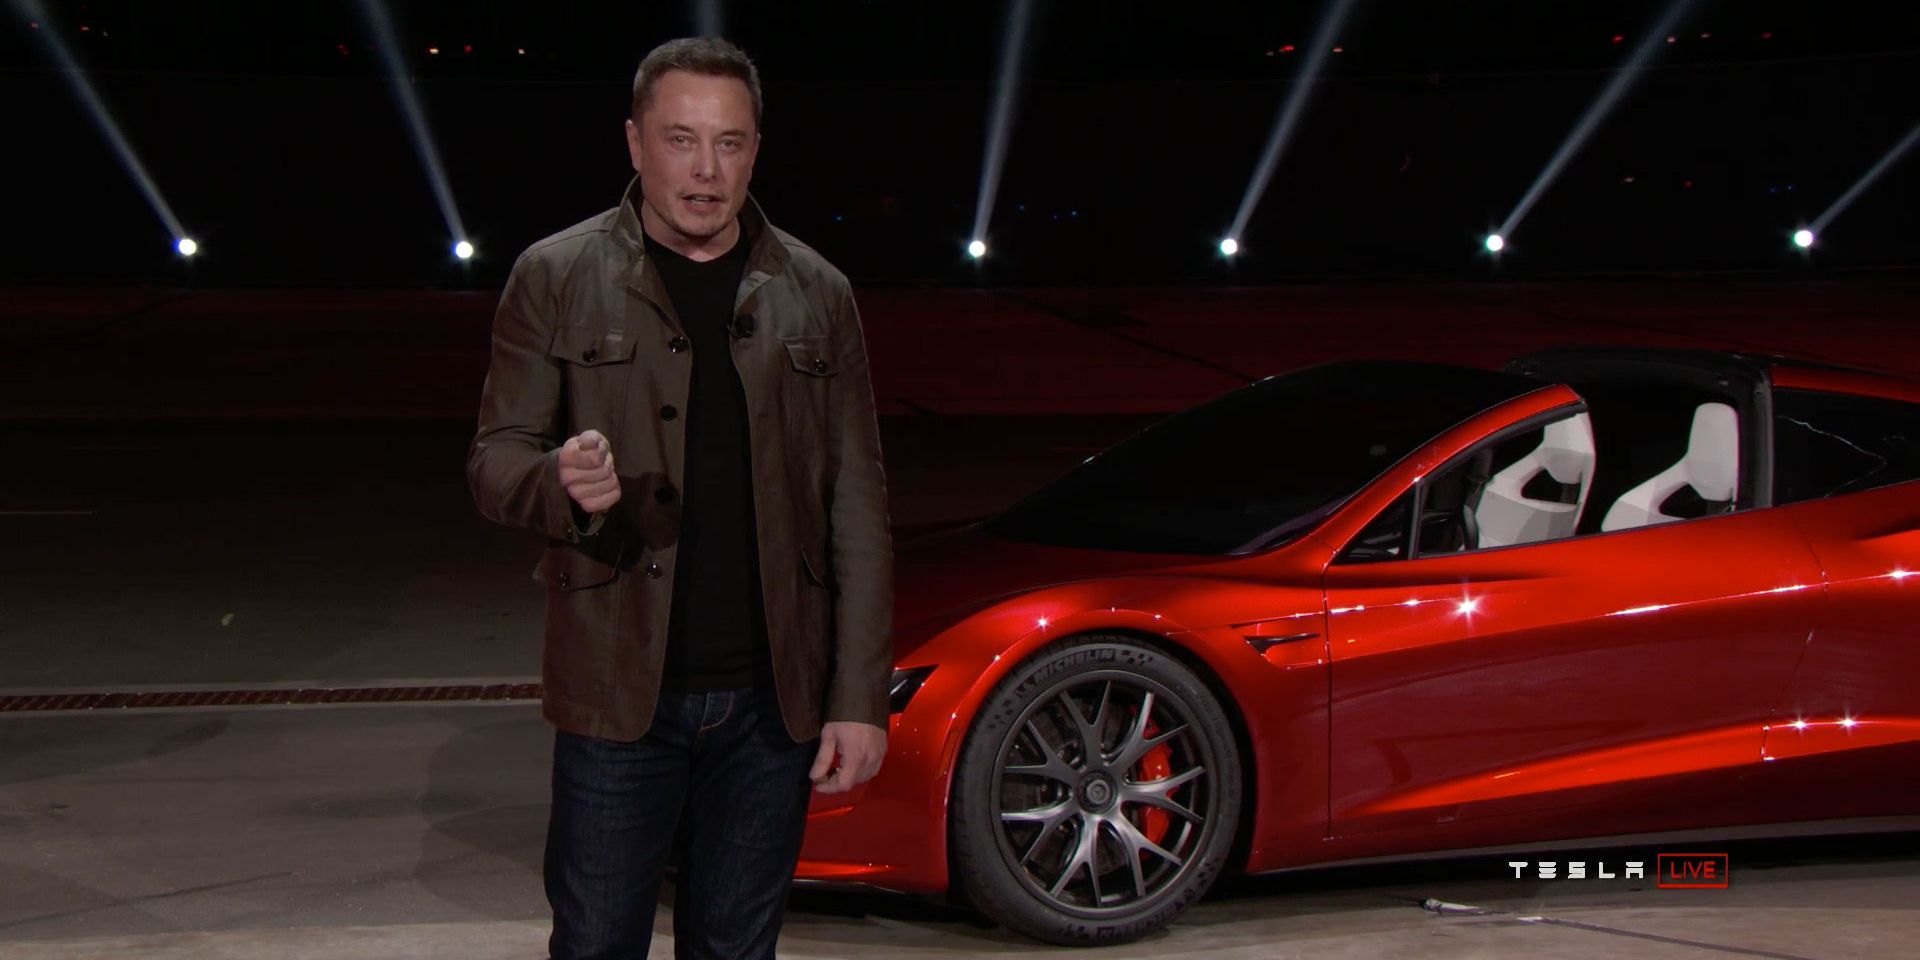 Elon Musk presenting the new Tesla Roadster